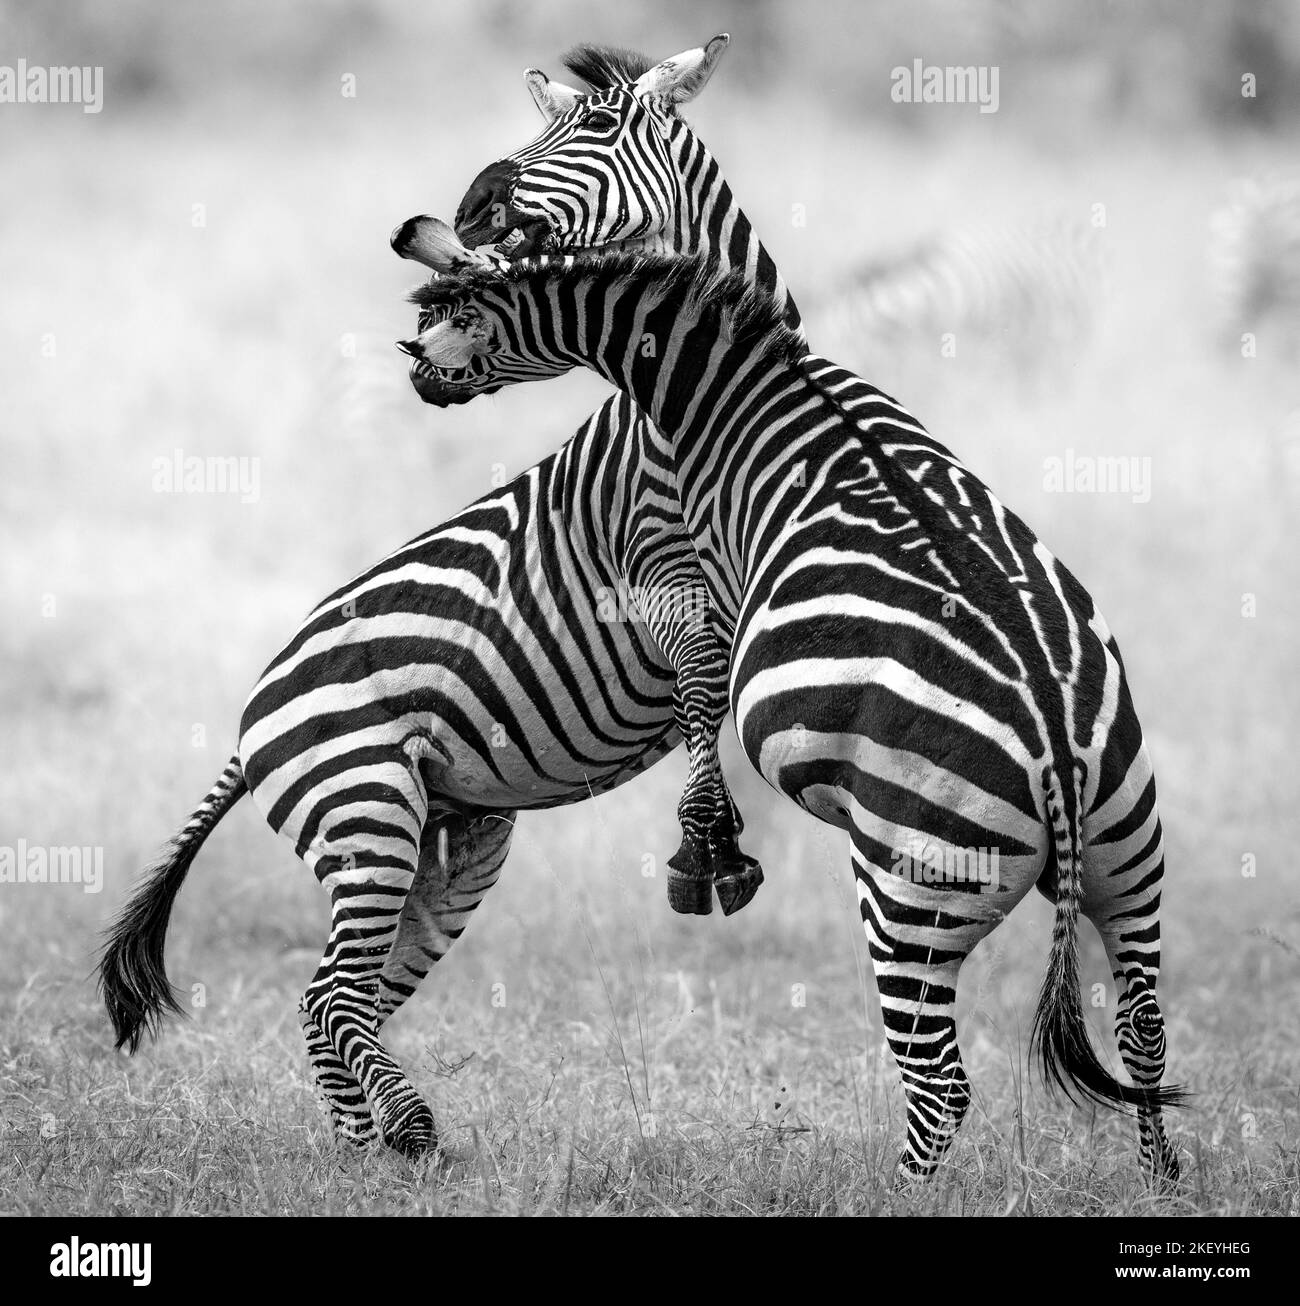 The Zebras Are Engrossed In Their Waltz Y Fight Masai Mara Kenya Two Zebras Were Captured 6579